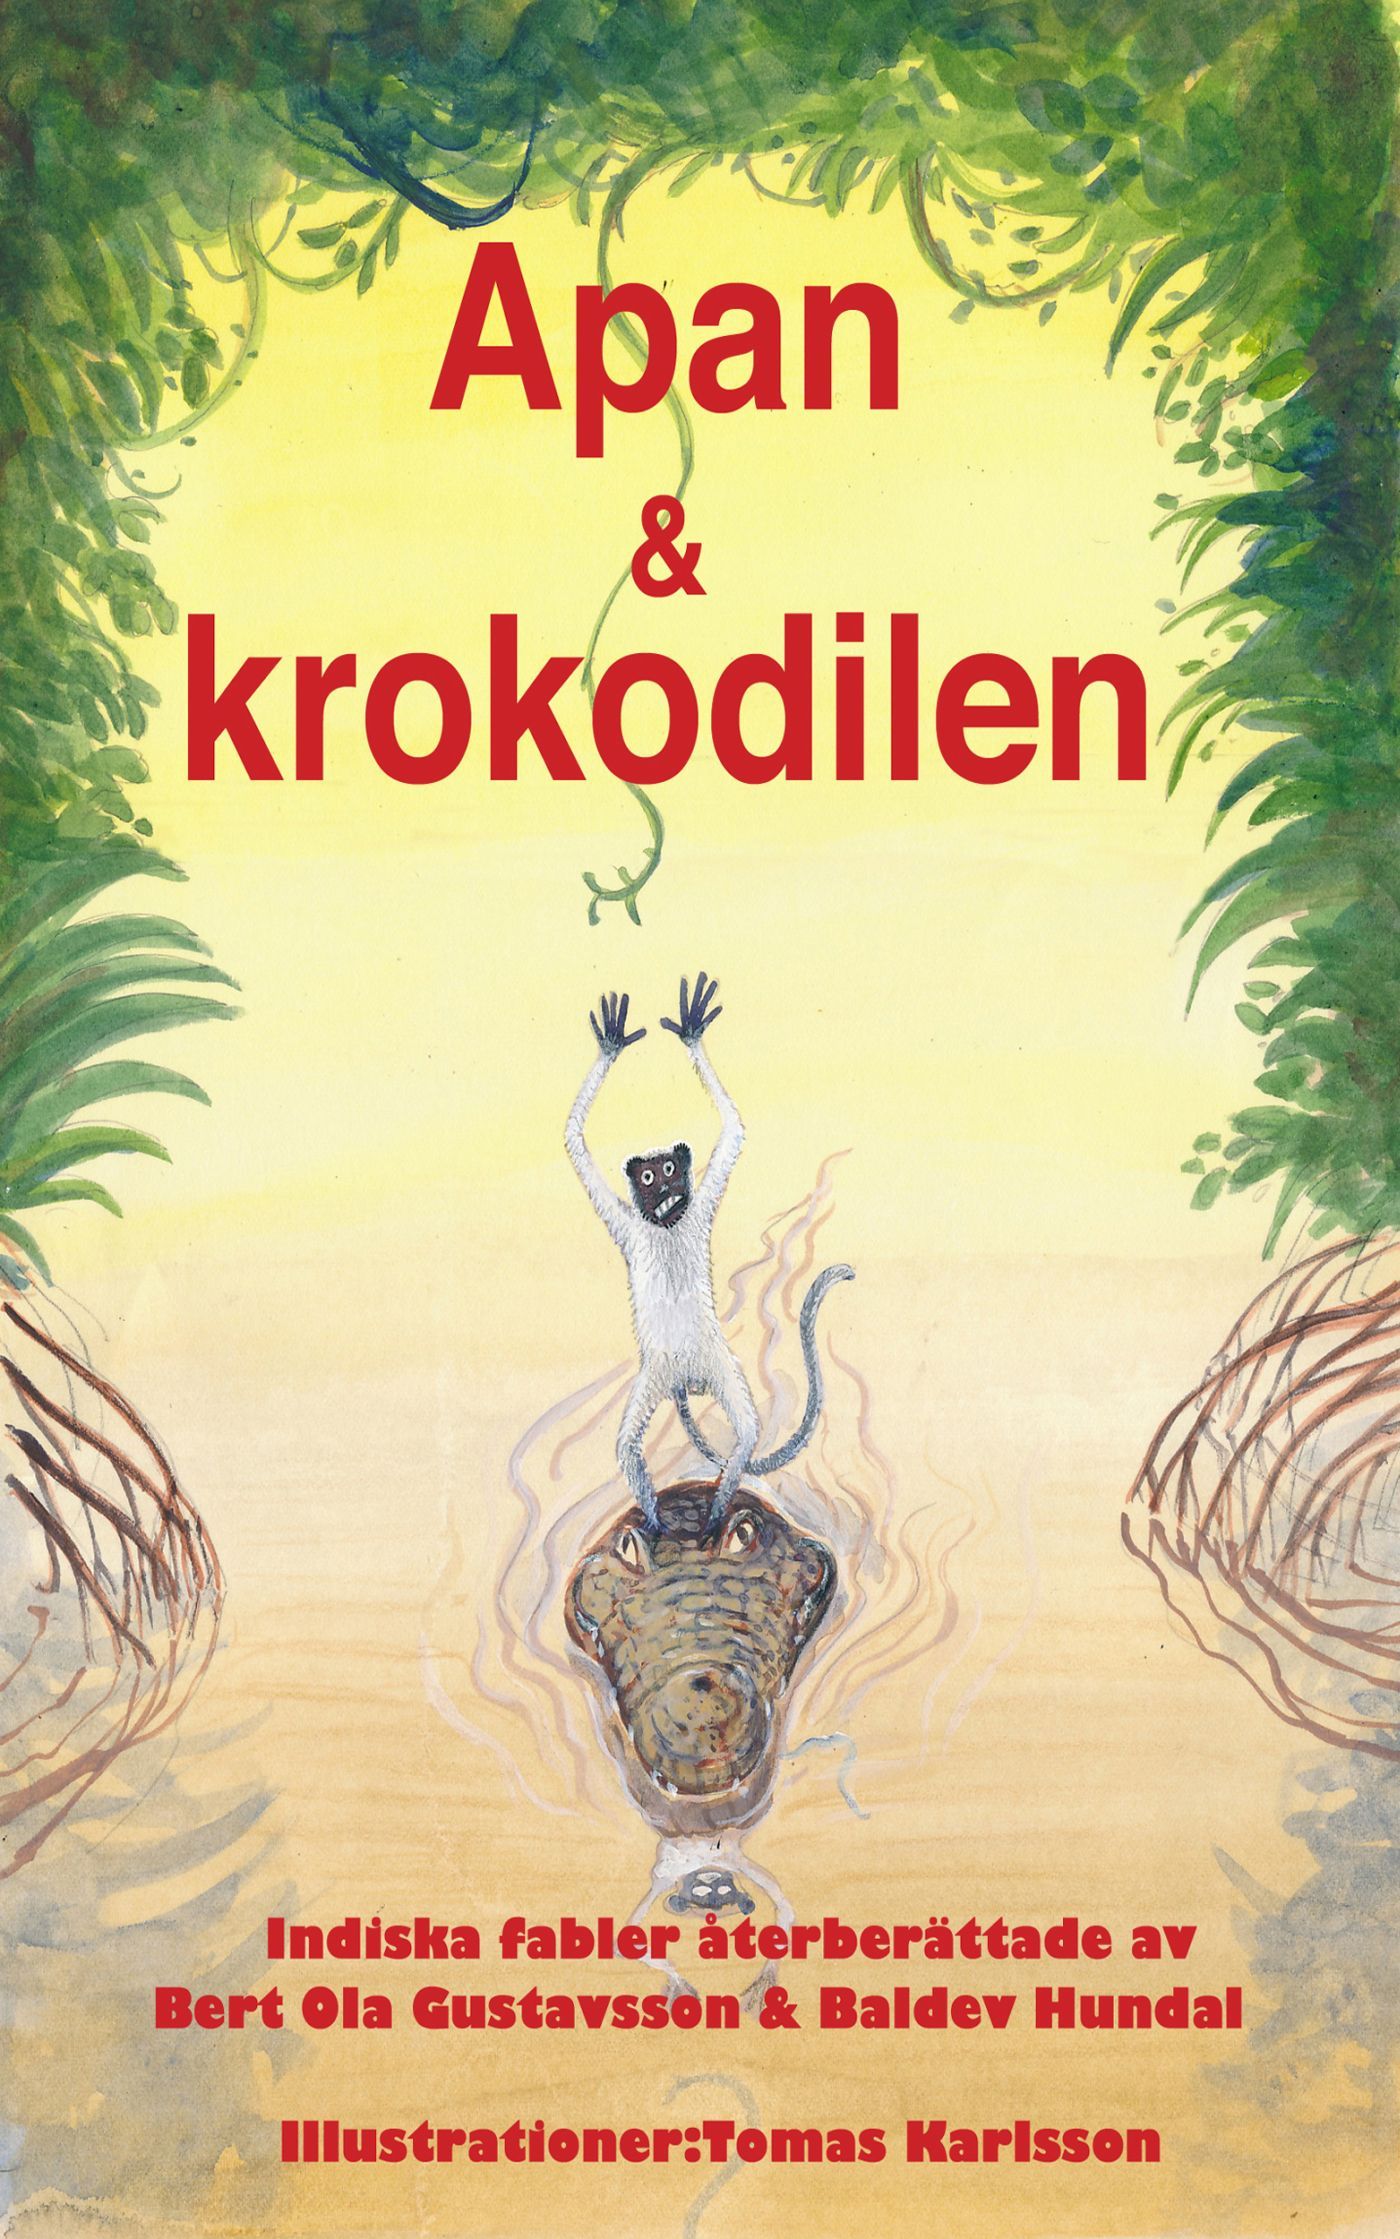 Apan & krokodilen, eBook by Bert Ola Gustavsson, Baldev Hundal